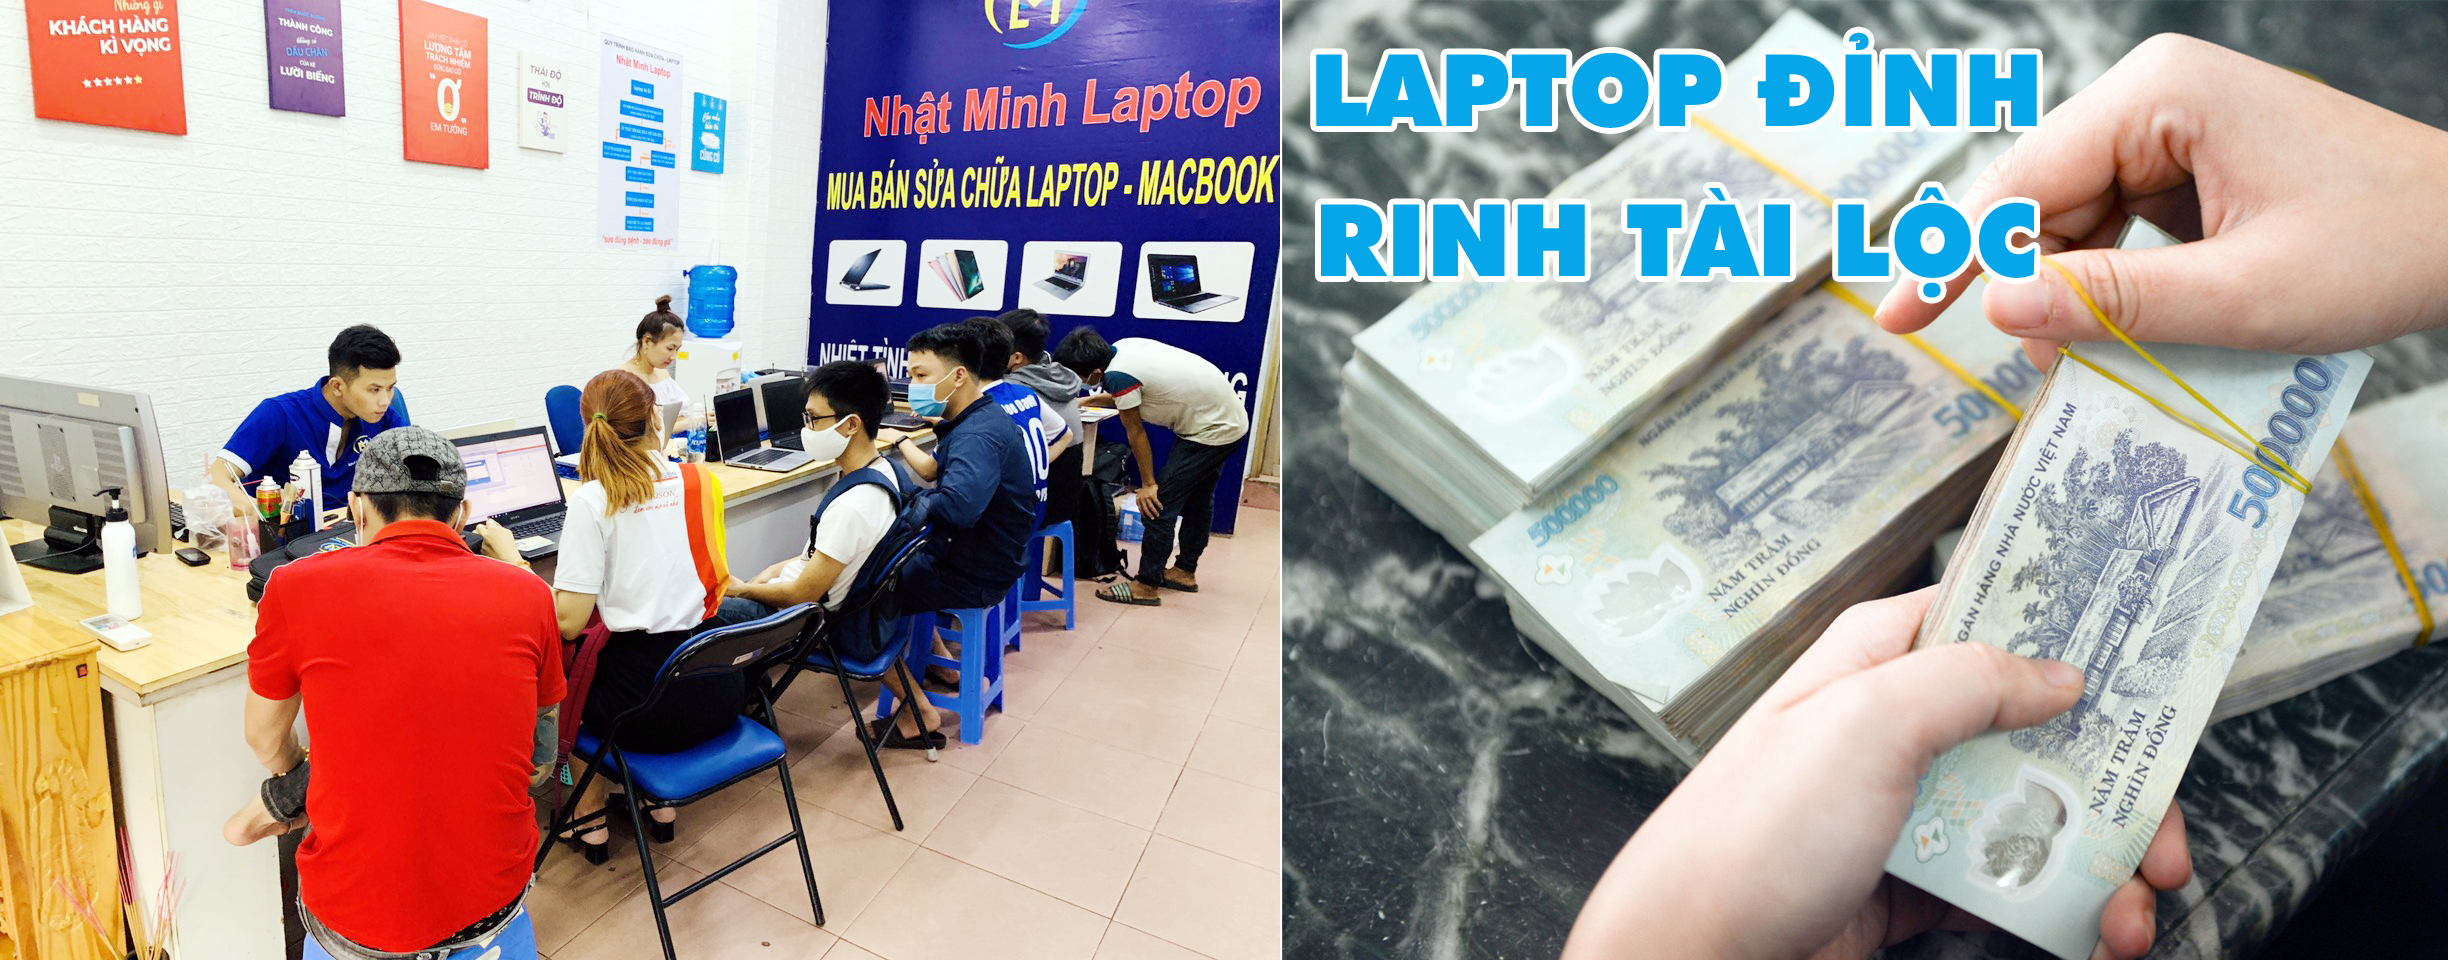 Laptop Nhật Minh